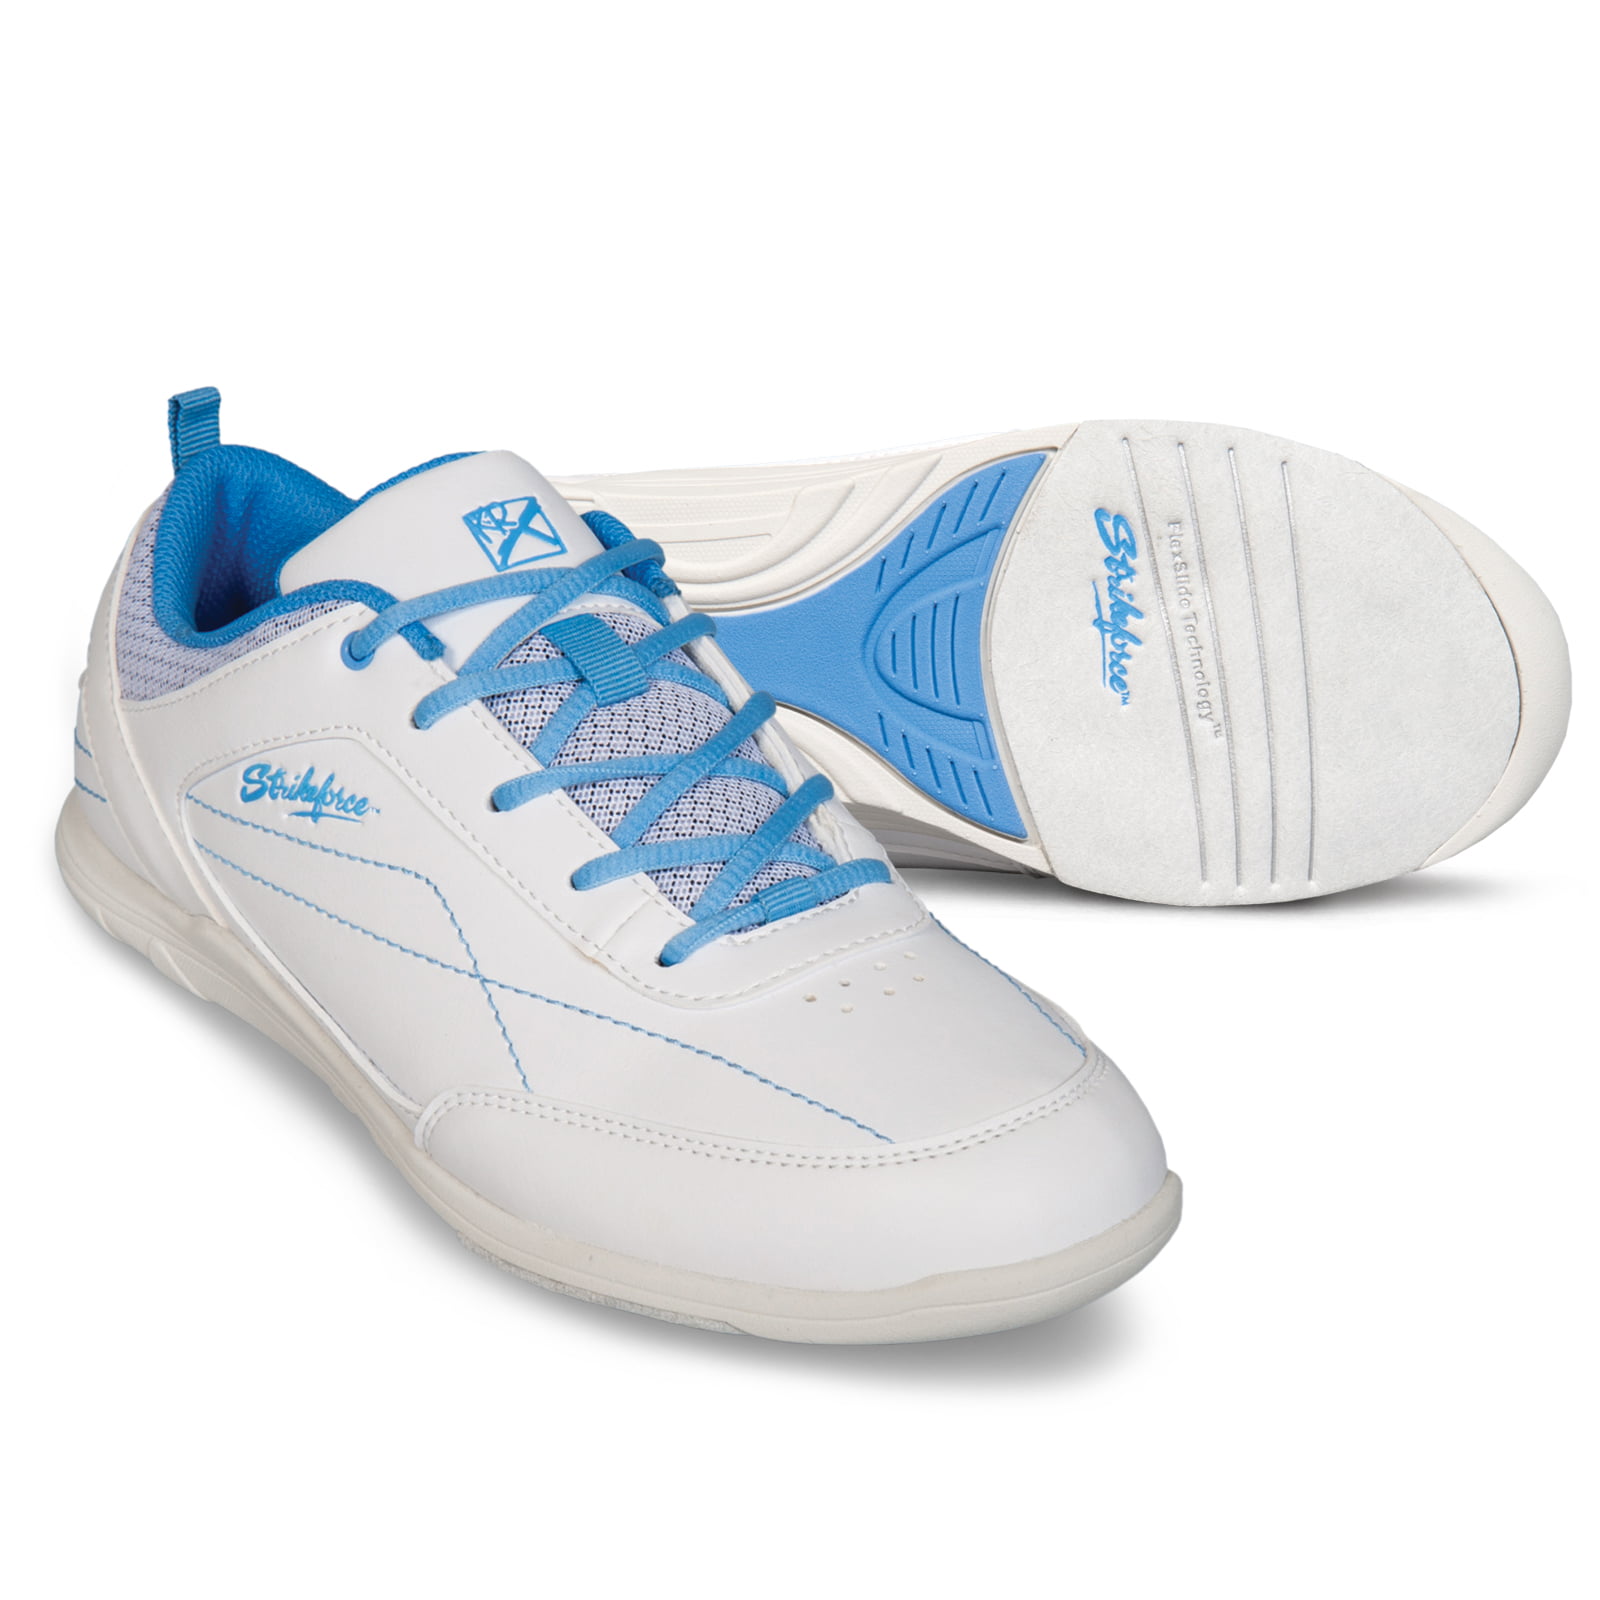 KR Strikeforce Gem White/Blue Womens Bowling Shoes Size 9.5 